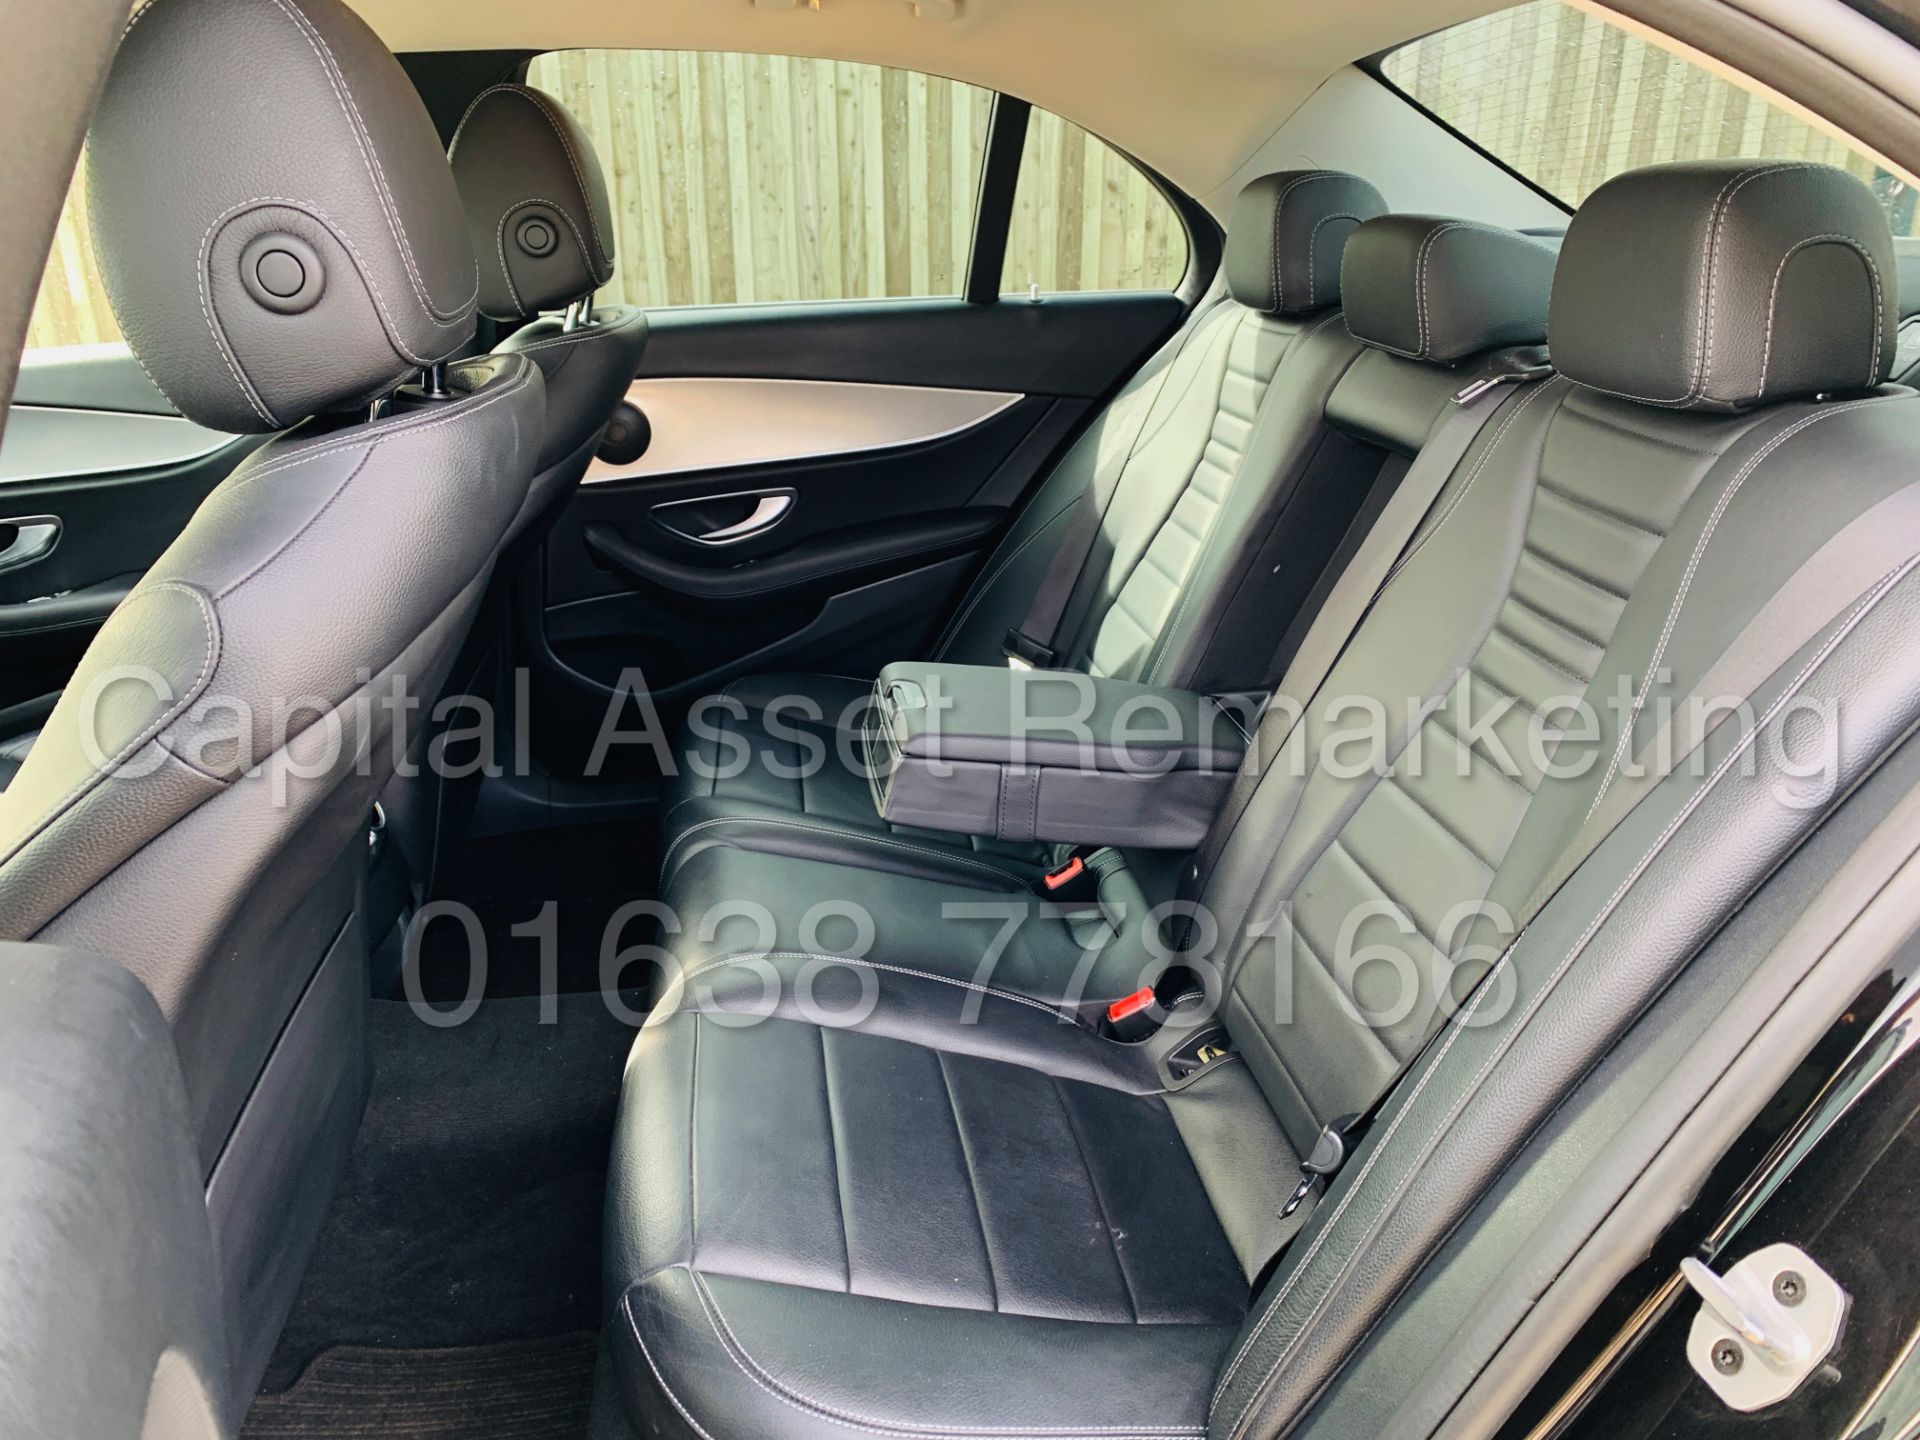 On Sale MERCEDES-BENZ E220d "SE" SALOON 9G TRONIC AUTO - (2019) MODEL - MASSIVE SPEC - 1 KEEPER - - Image 26 of 47